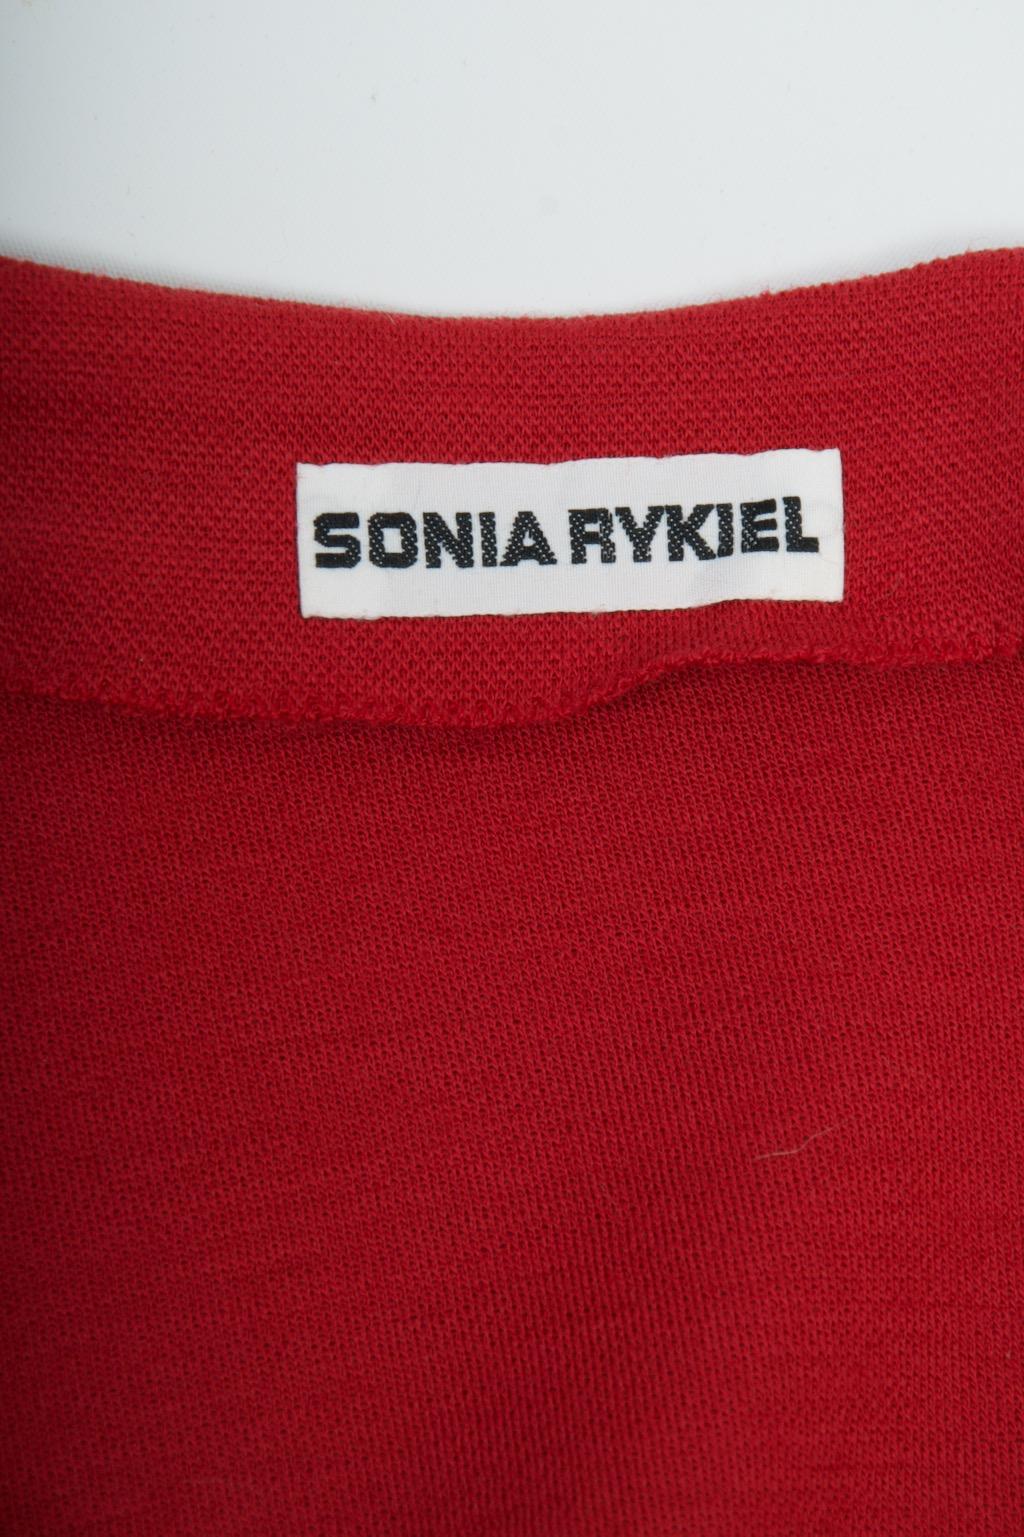 Sonia Rykiel Red Knit Coat/Dress For Sale 5